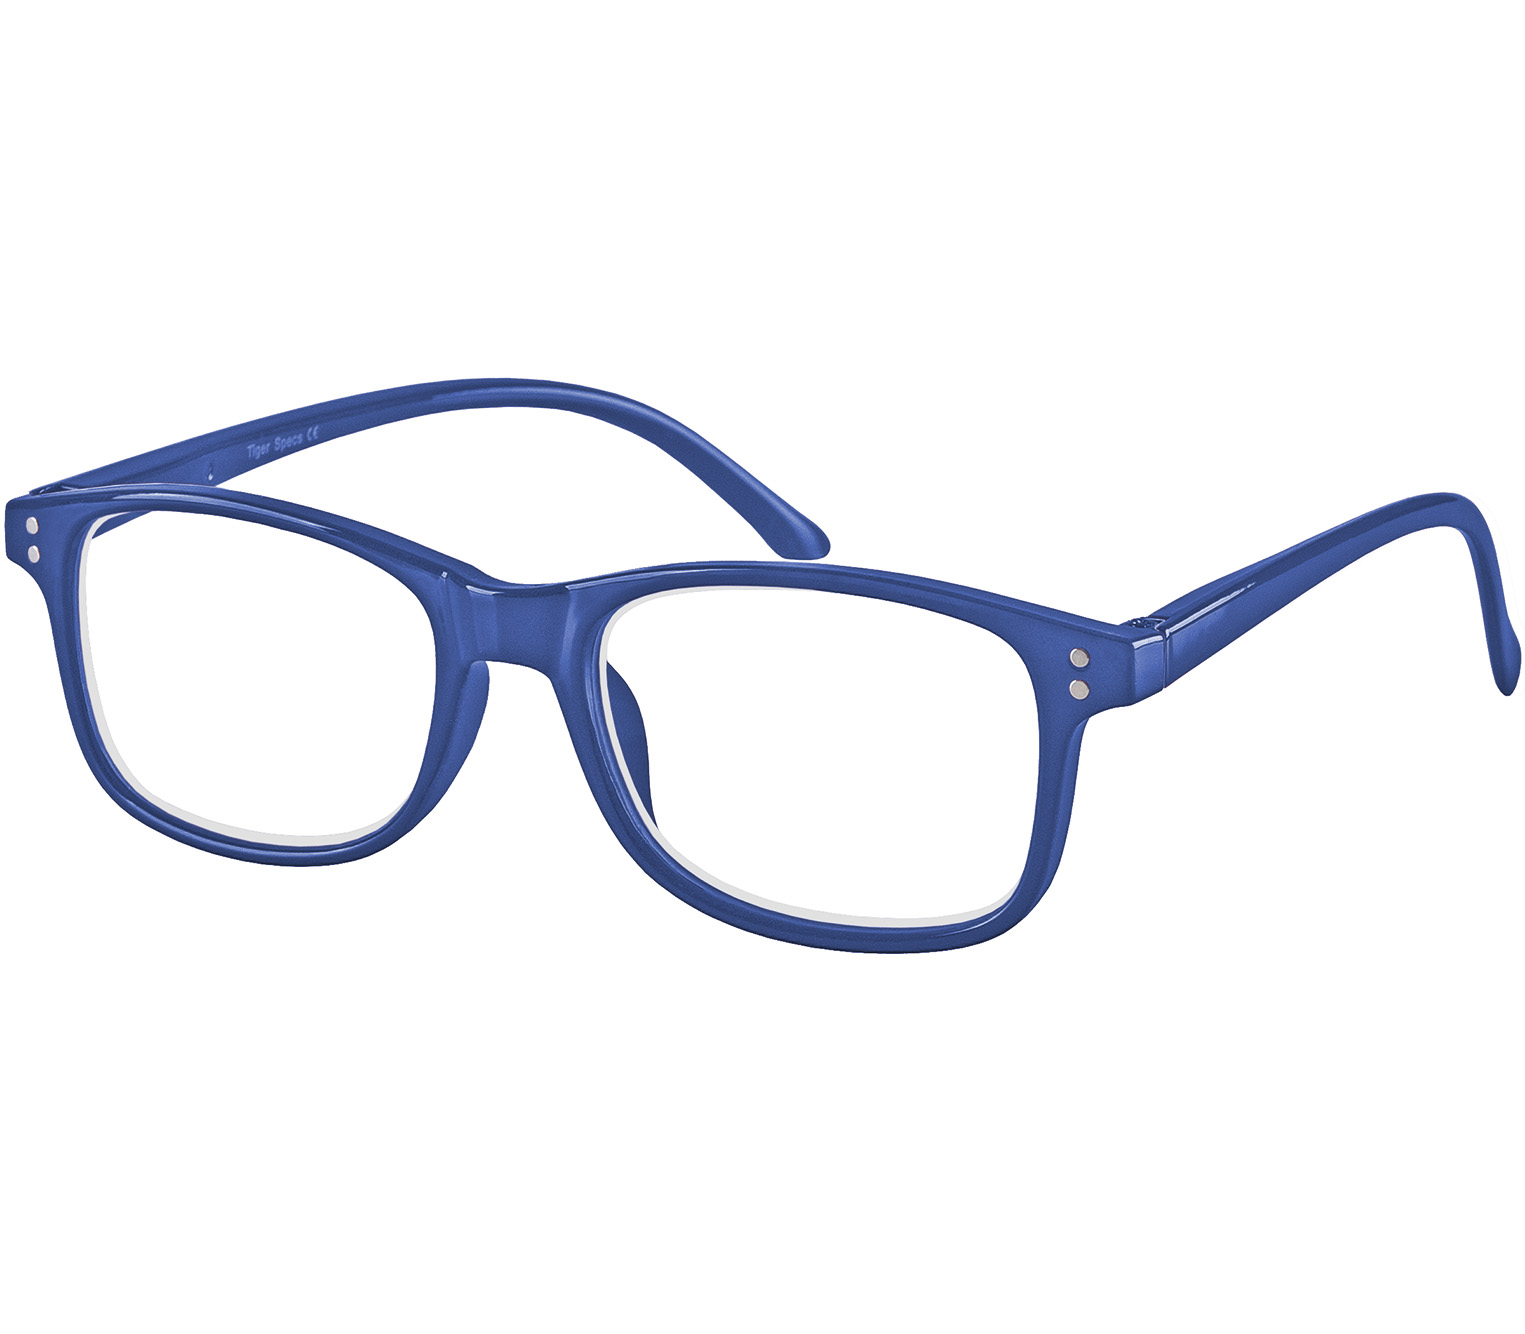 Main Image (Angle) - Eclipse (Blue) Classic Reading Glasses